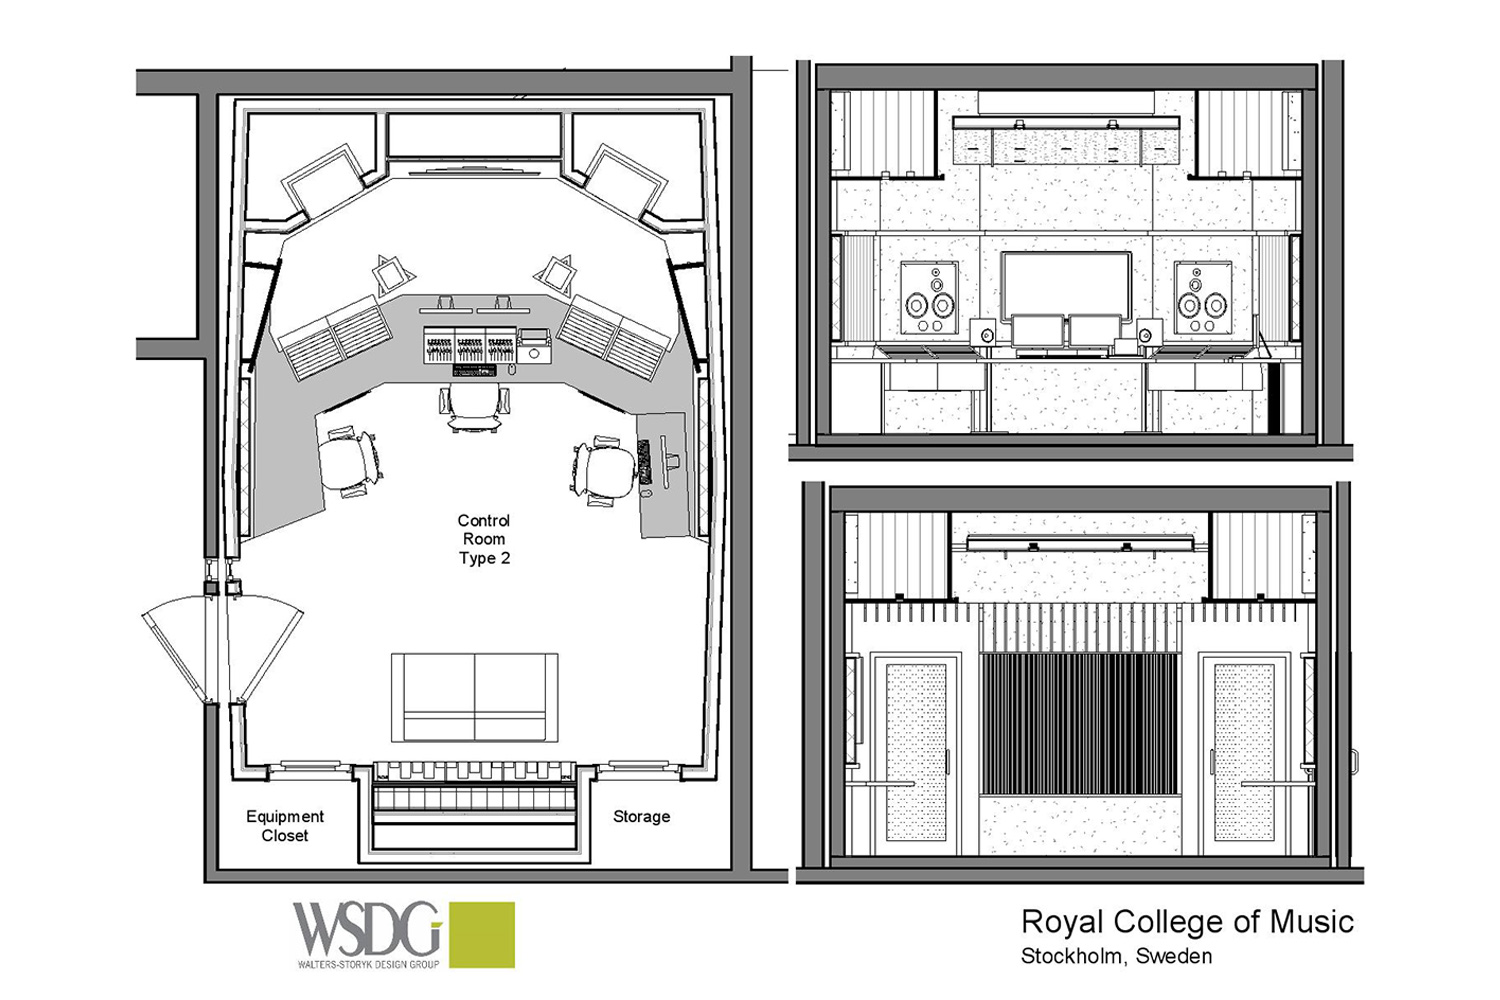 The Stockholm Royal College of Music. WSDG design presentation drawings 3.